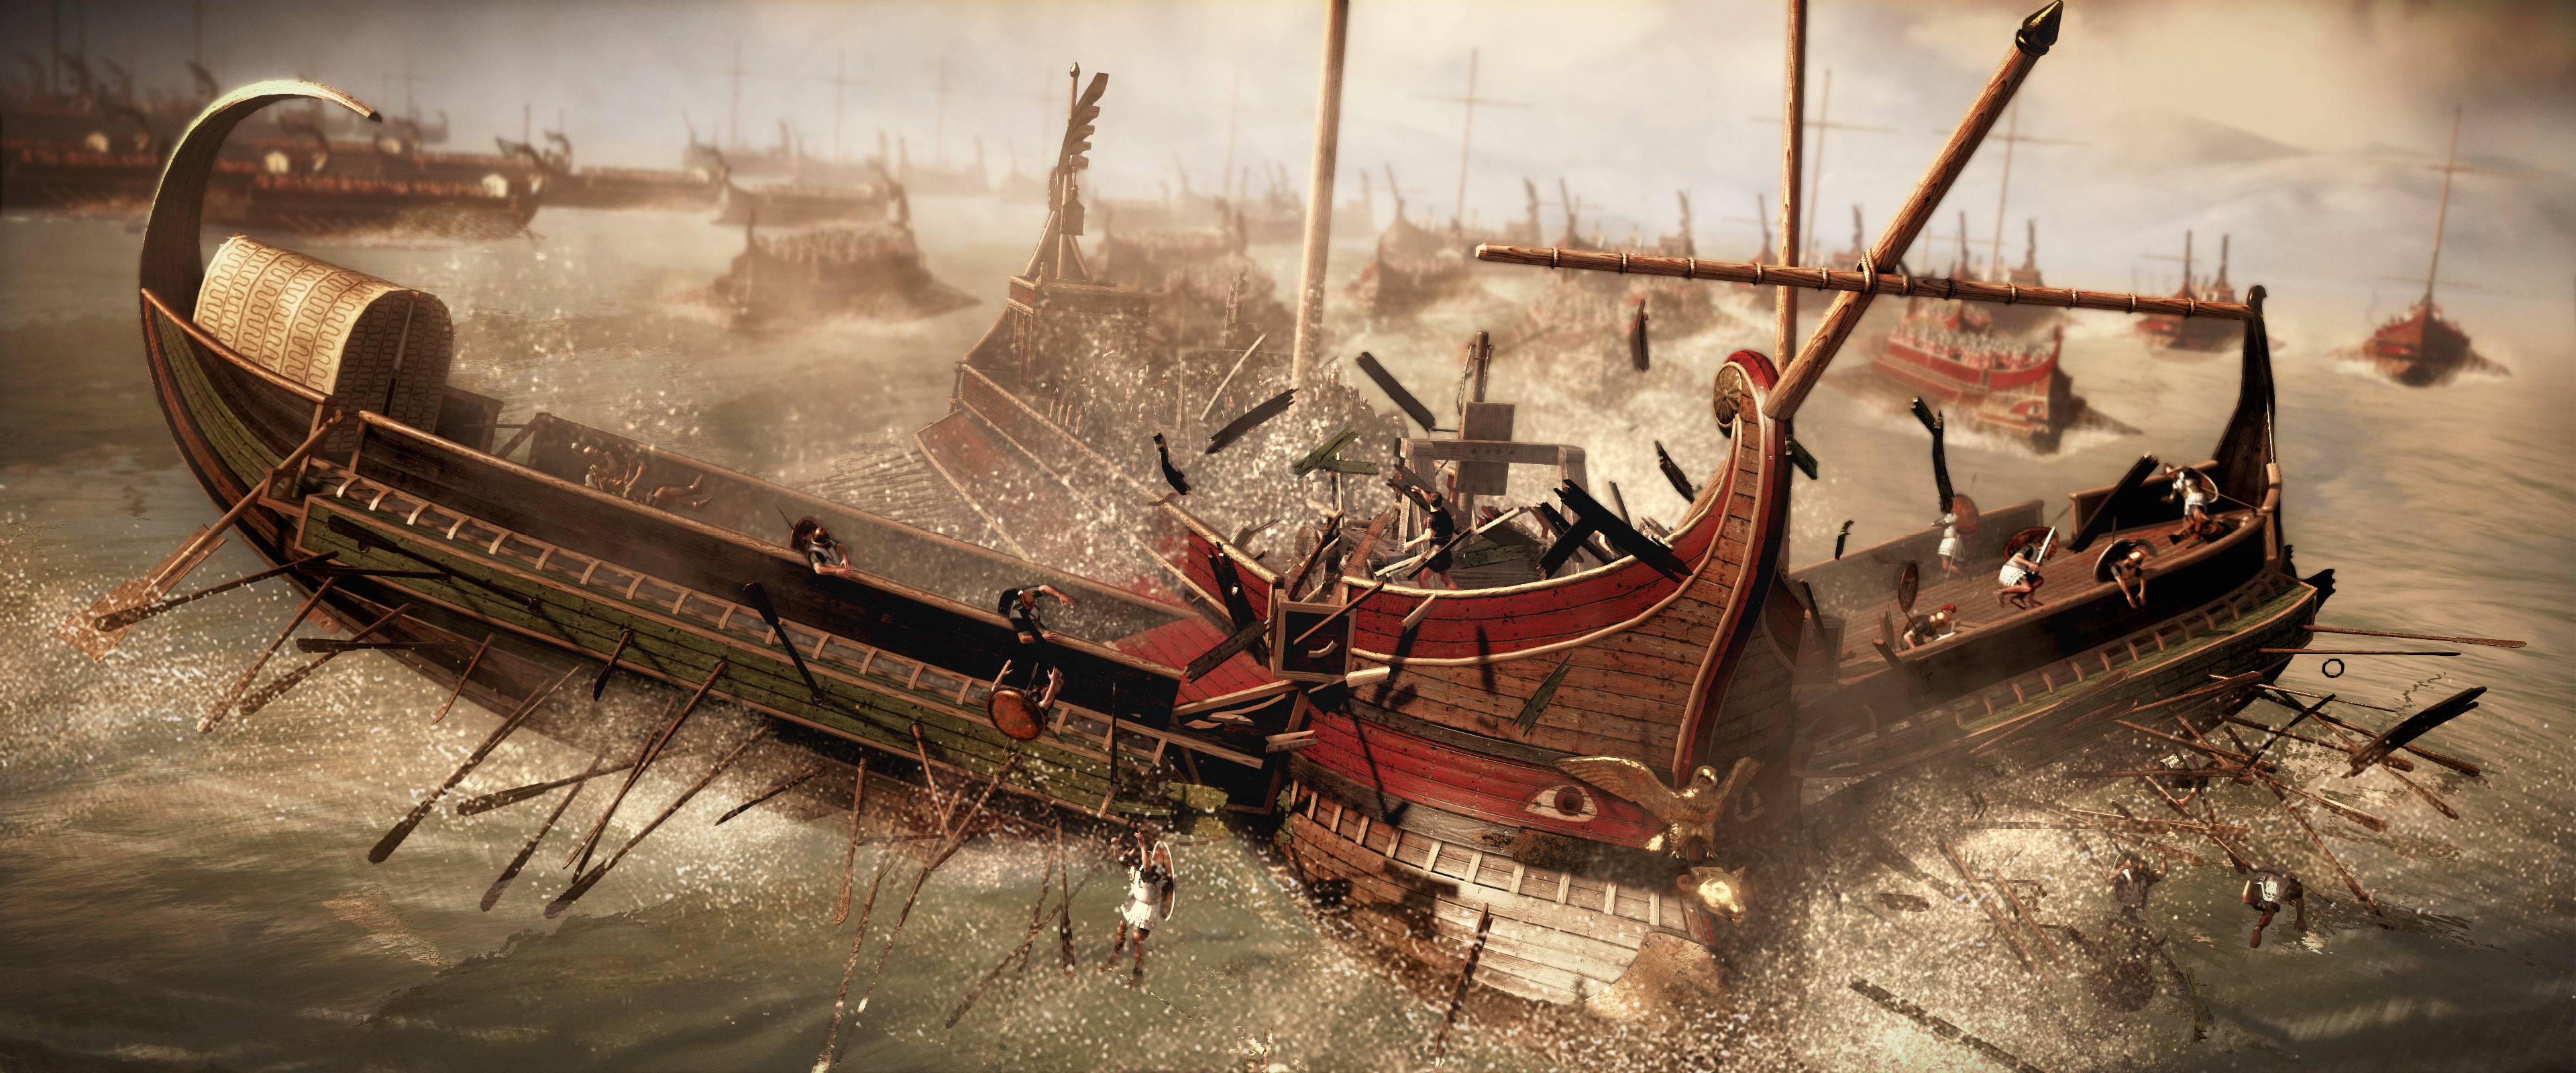 Assassin's Creed 3 Walkthrough Part 39 - Civil War 